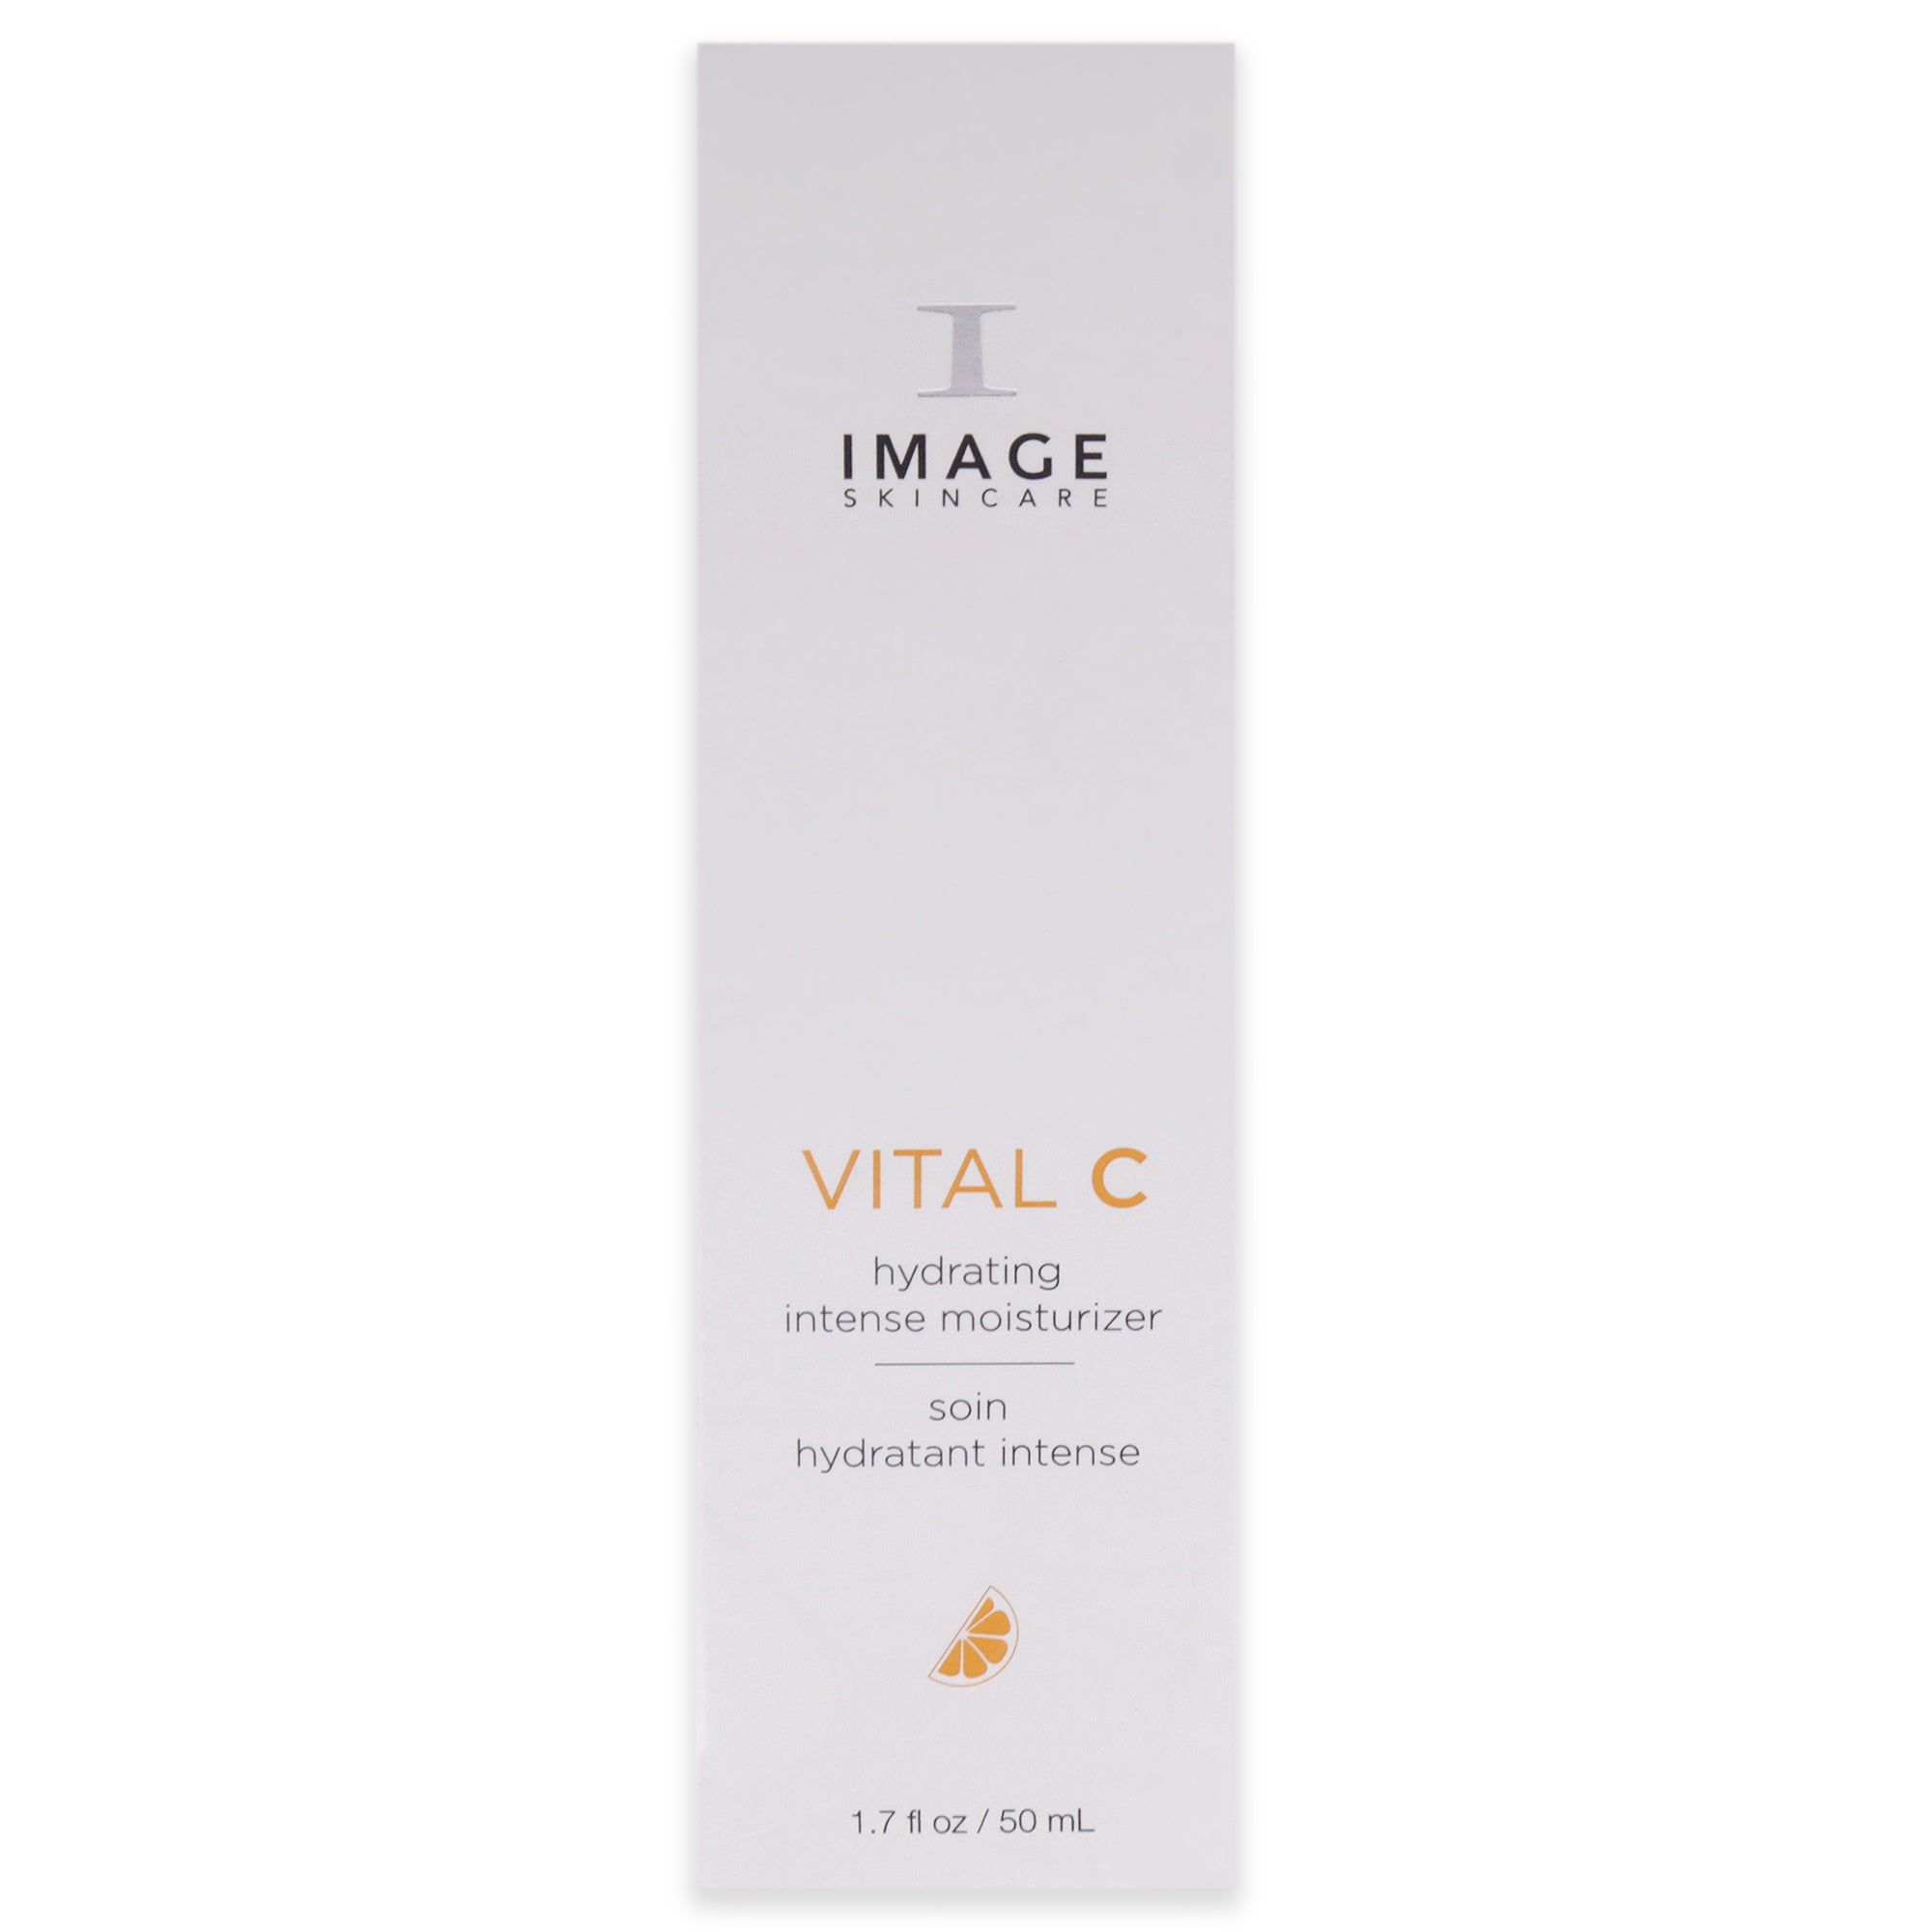 Vital C Hydrating Intense by Image for Unisex - 1.7 oz Moisturizer